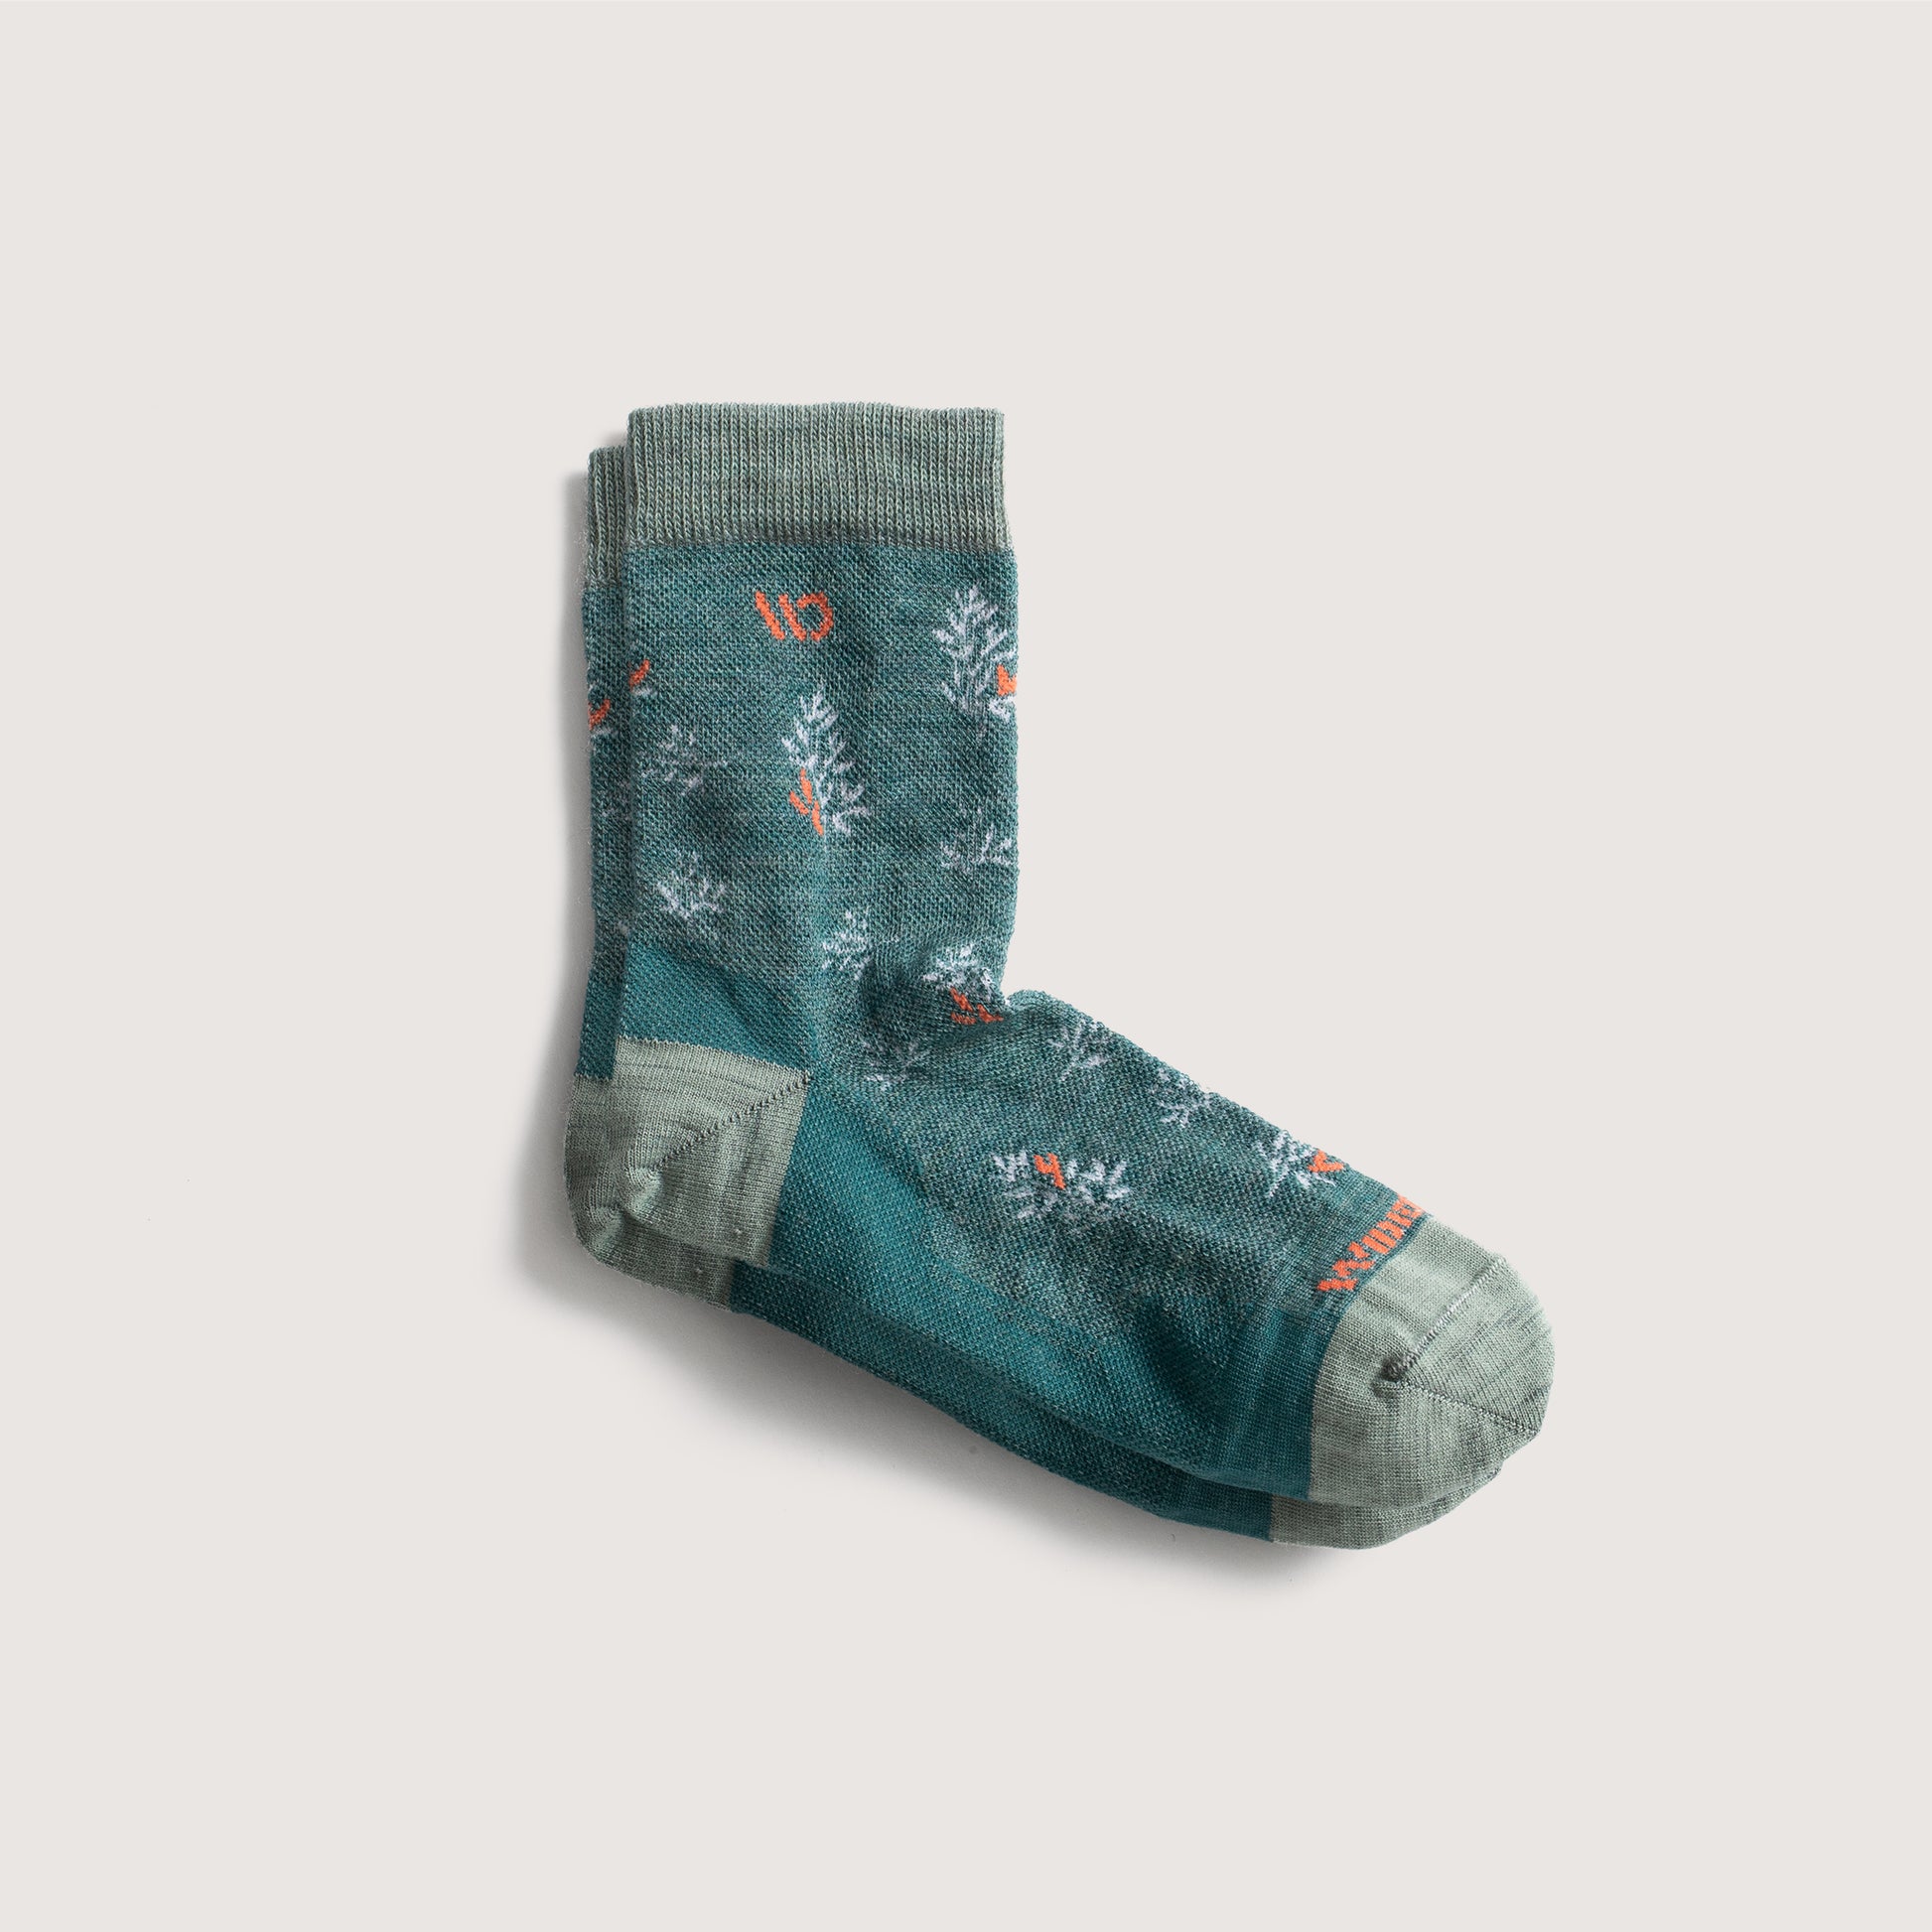 Flat socks featuring seafoam heel/toe/cuff, teal body, orange logo and white pattern--Teal